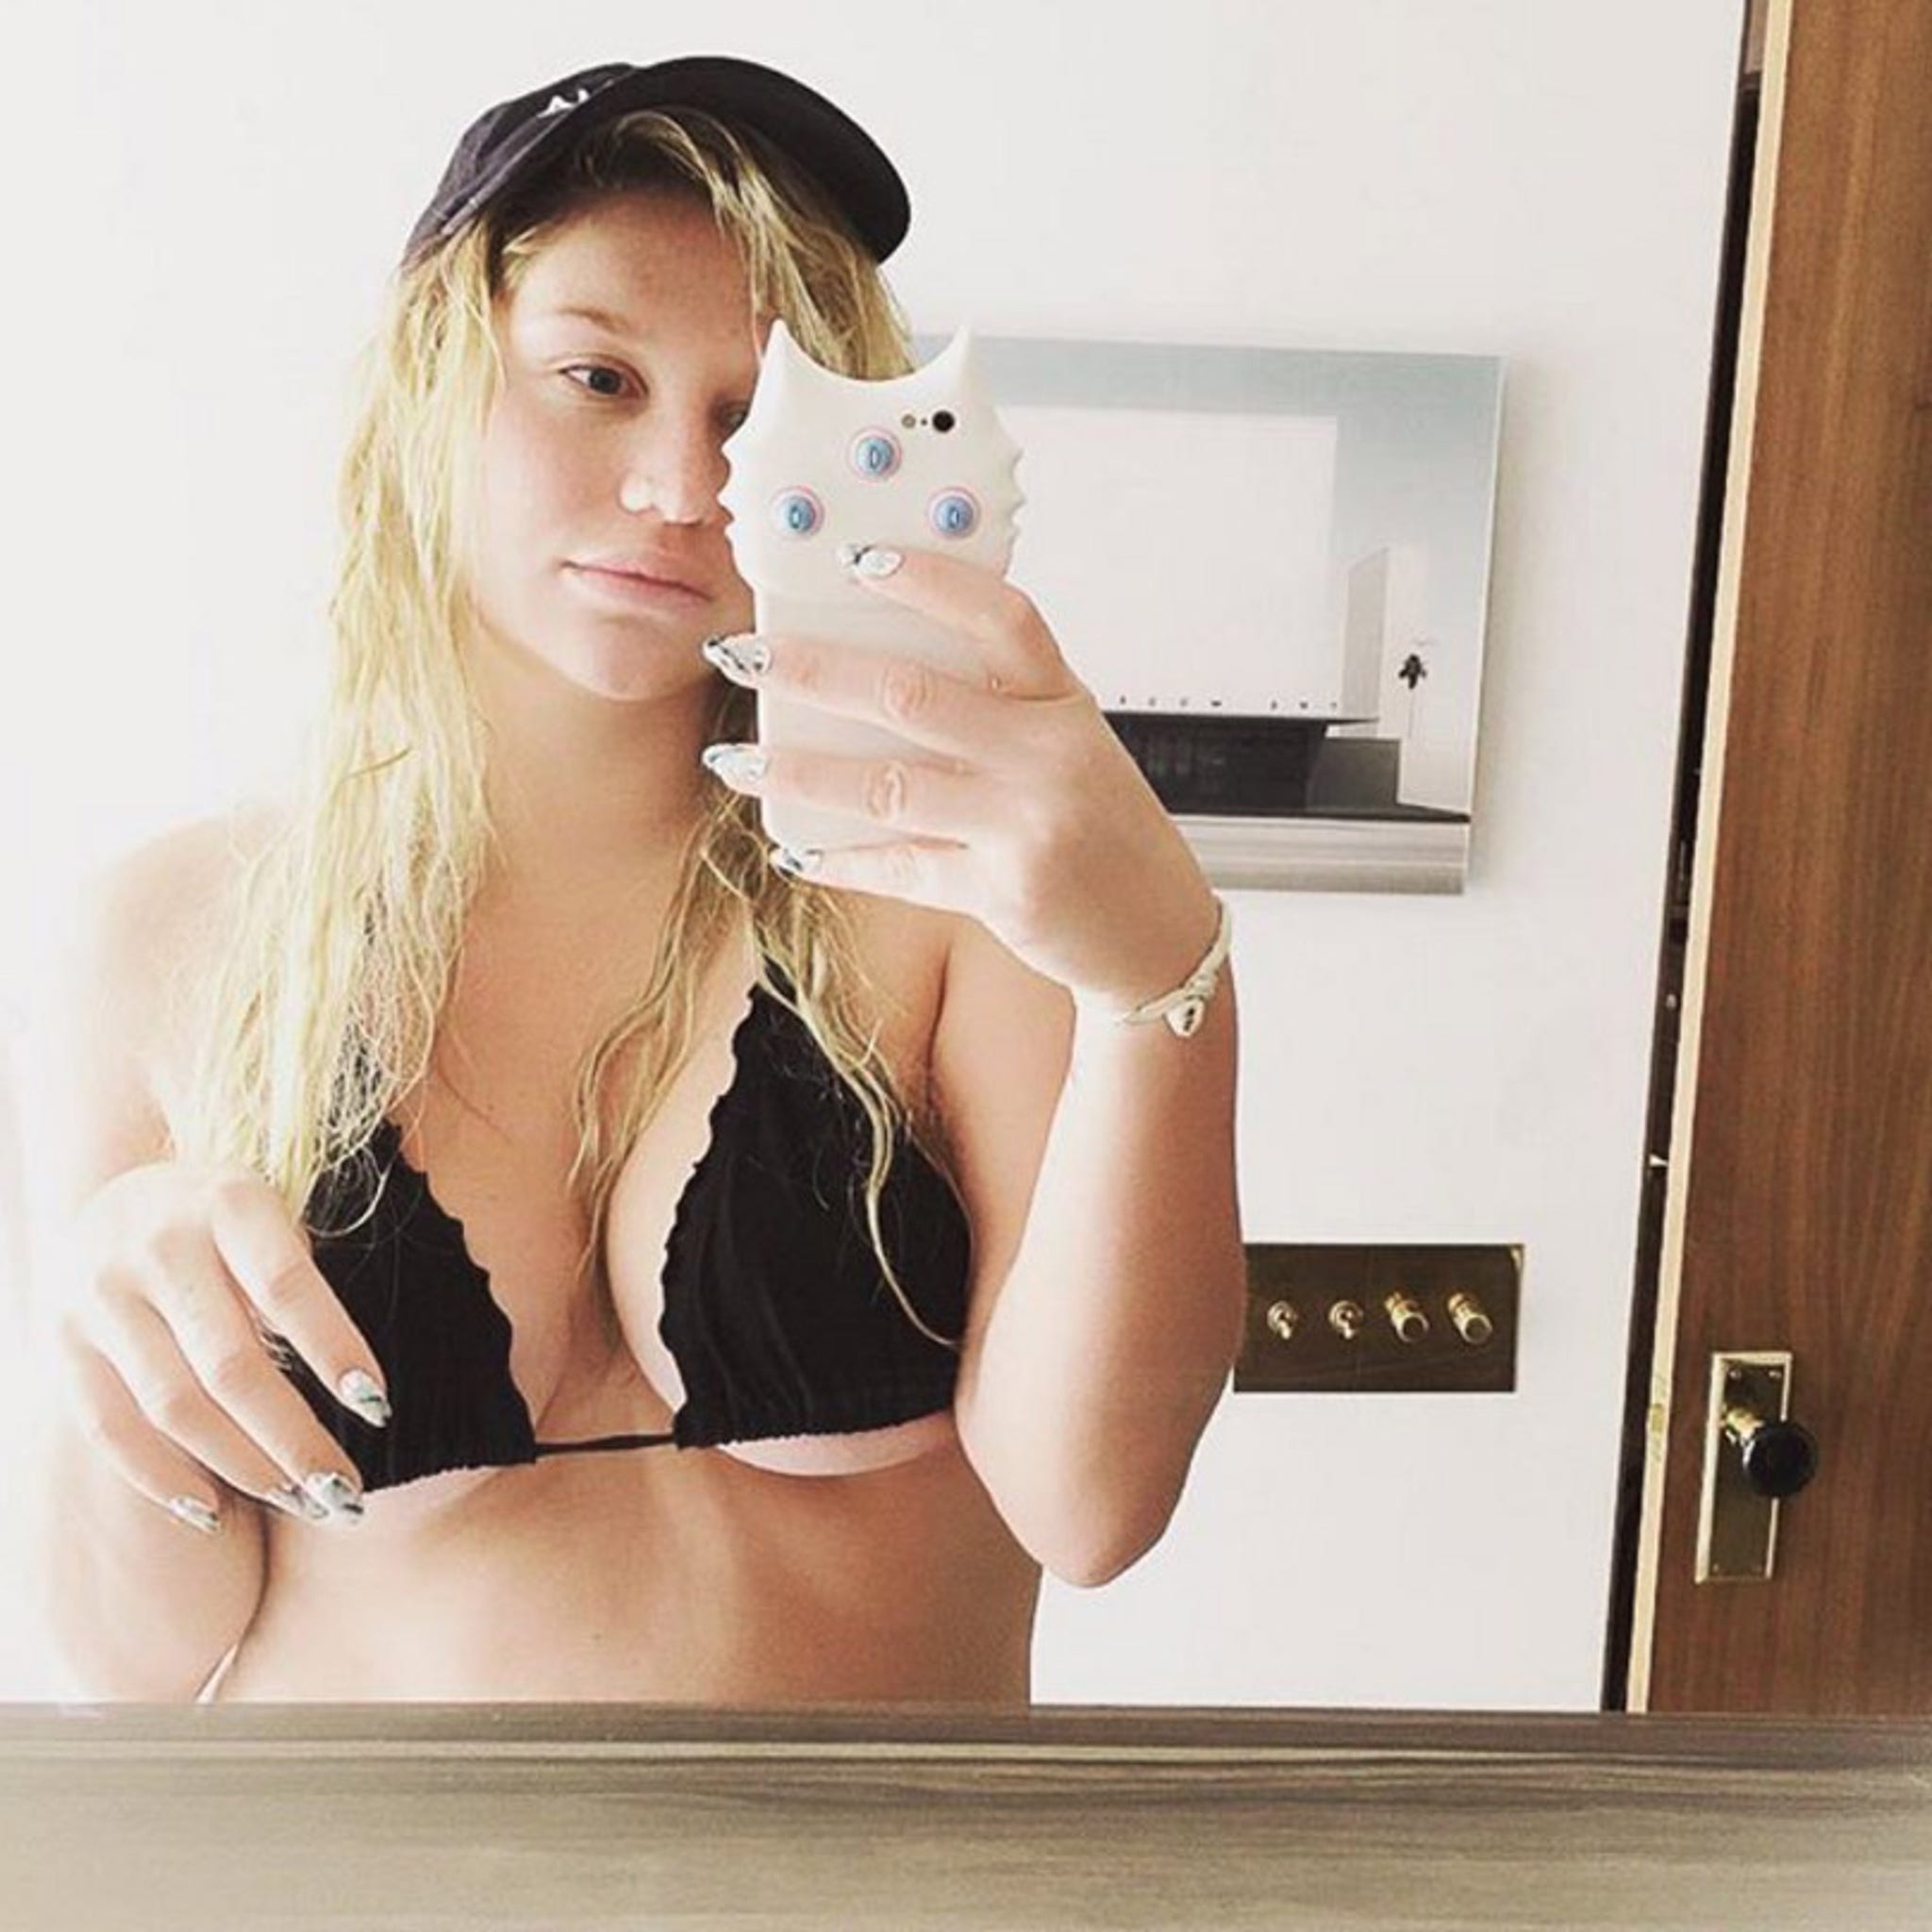 Kesha Goes Makeup-Free As She Nearly Pops Out of Too Small Bikini Top